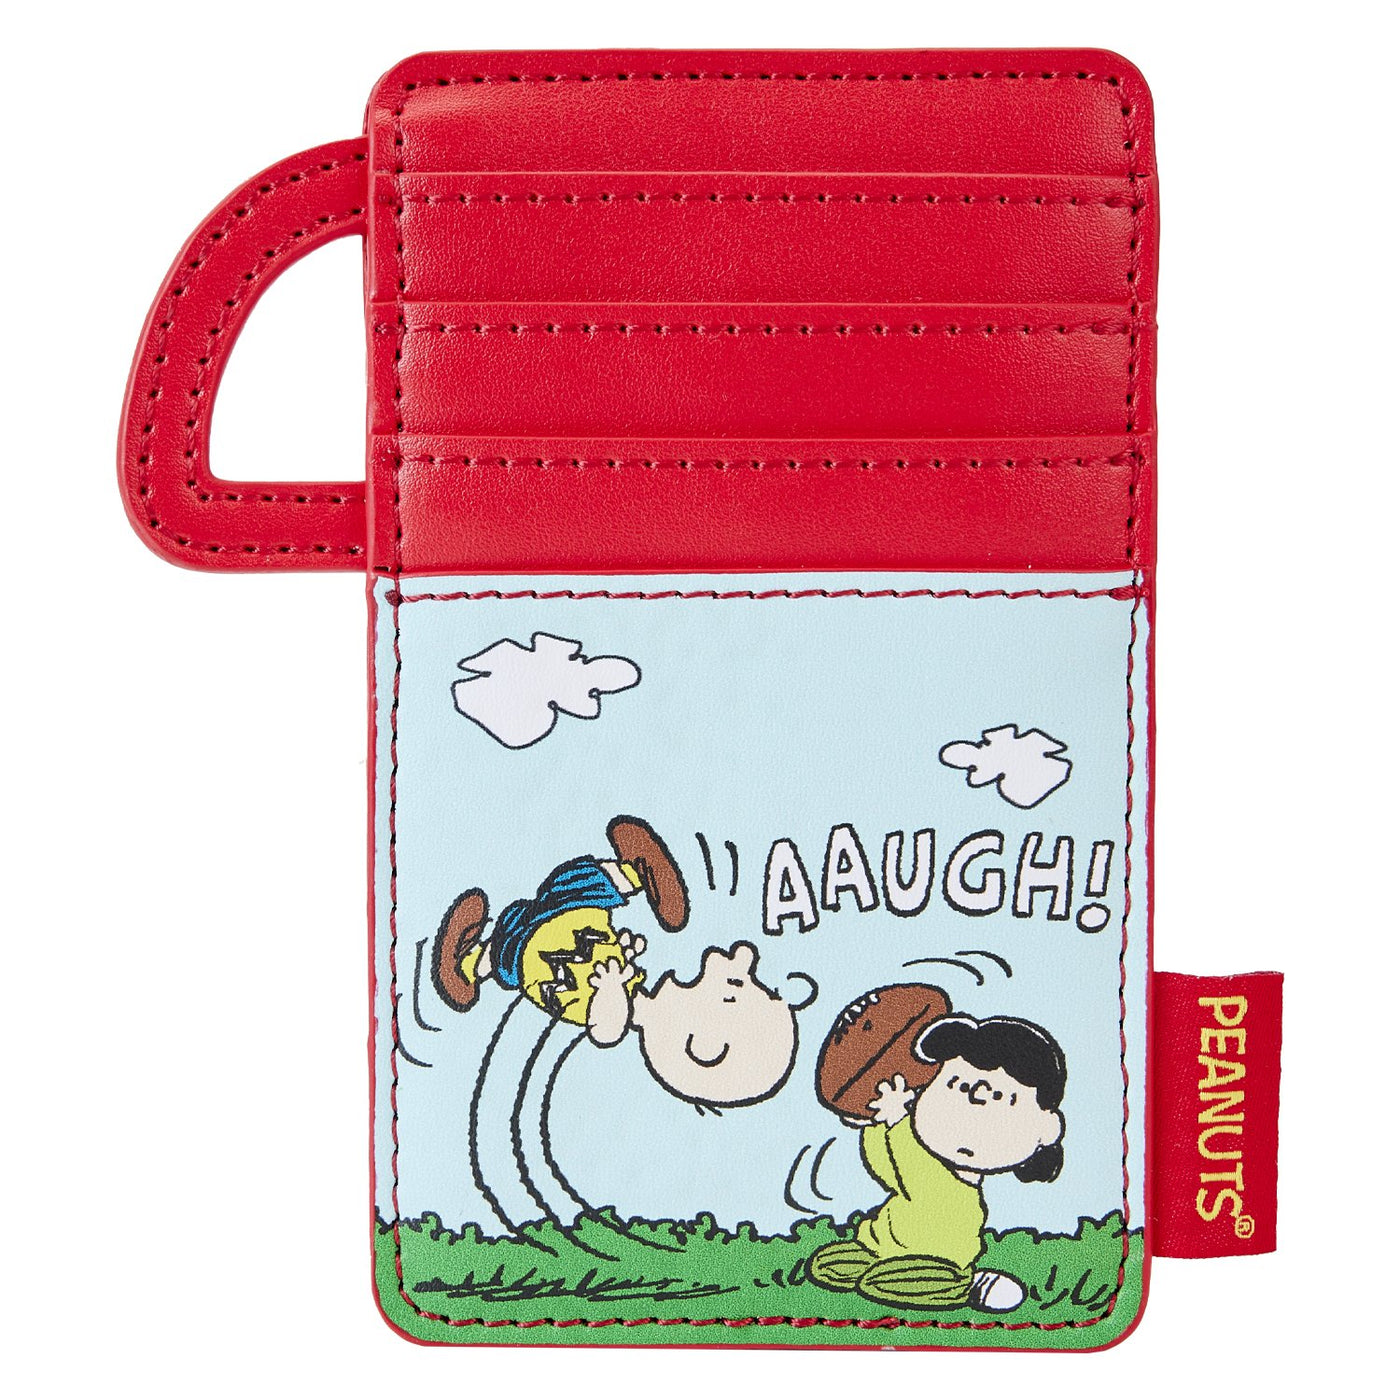 Loungefly Peanuts Charlie Brown Drink Cardholder - Back